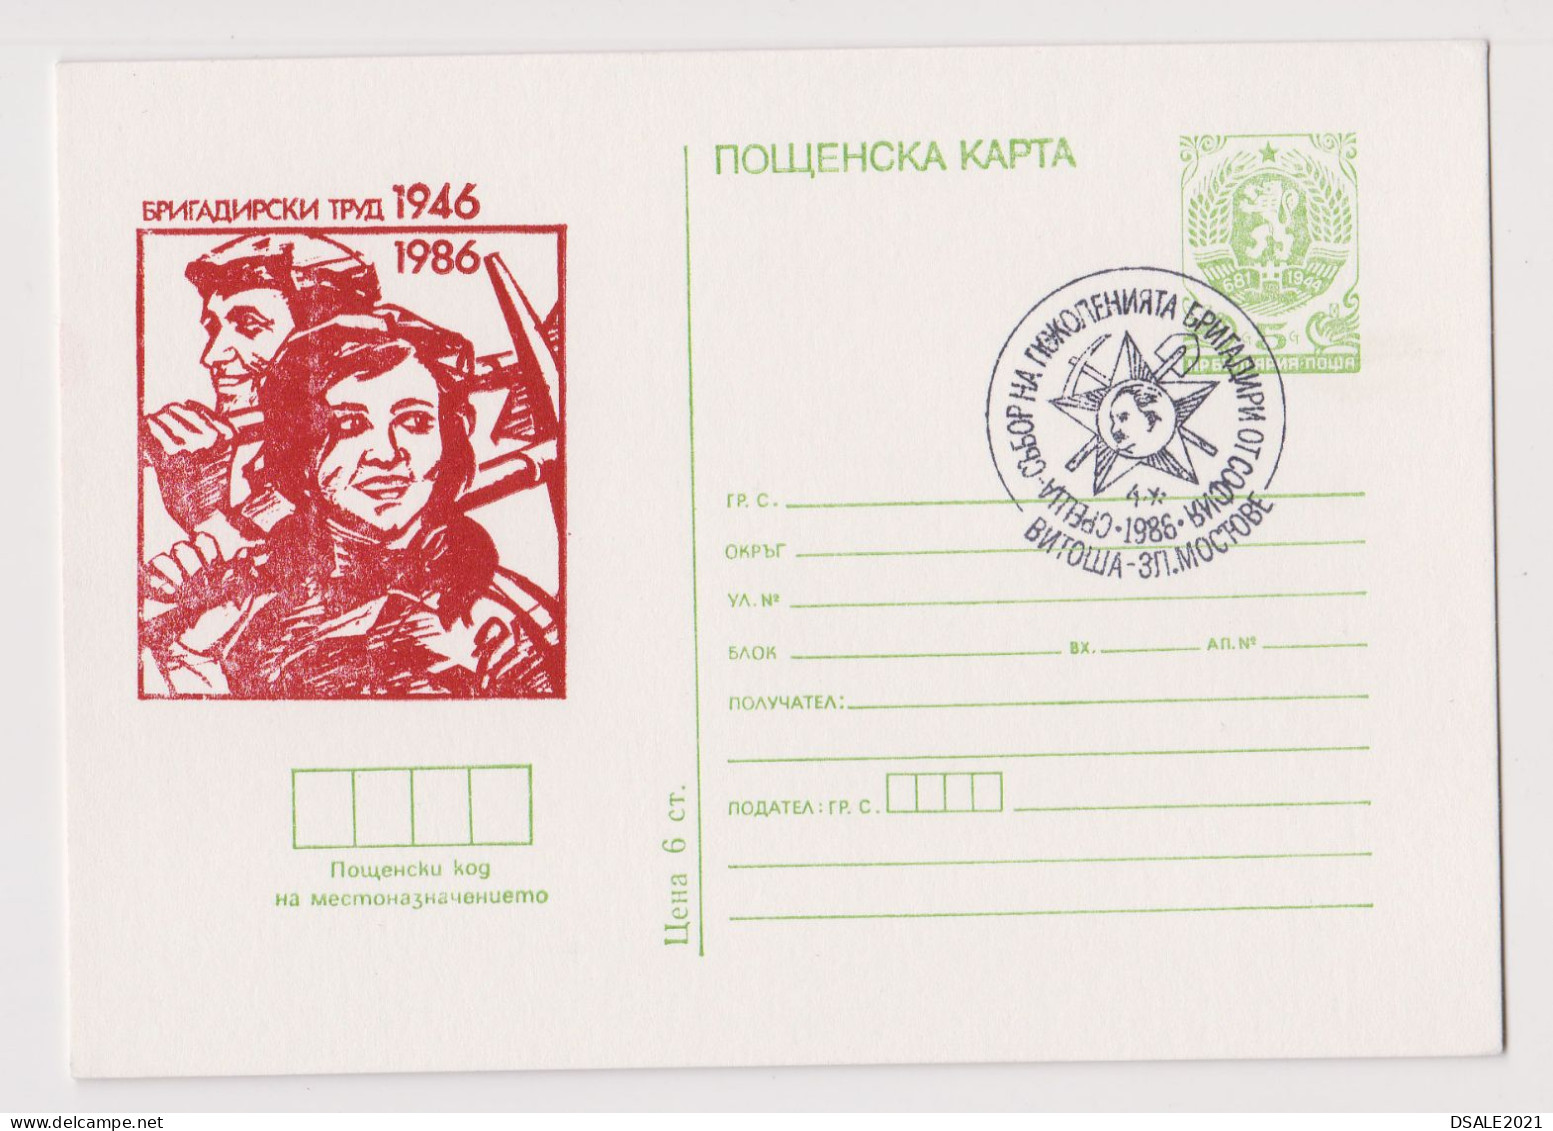 Bulgaria Bulgarie Bulgarien 1986 Postal Stationery Card, Ganzsachen, Entier, 1946 Bulgarian Youth Brigade Movement 67498 - Ansichtskarten